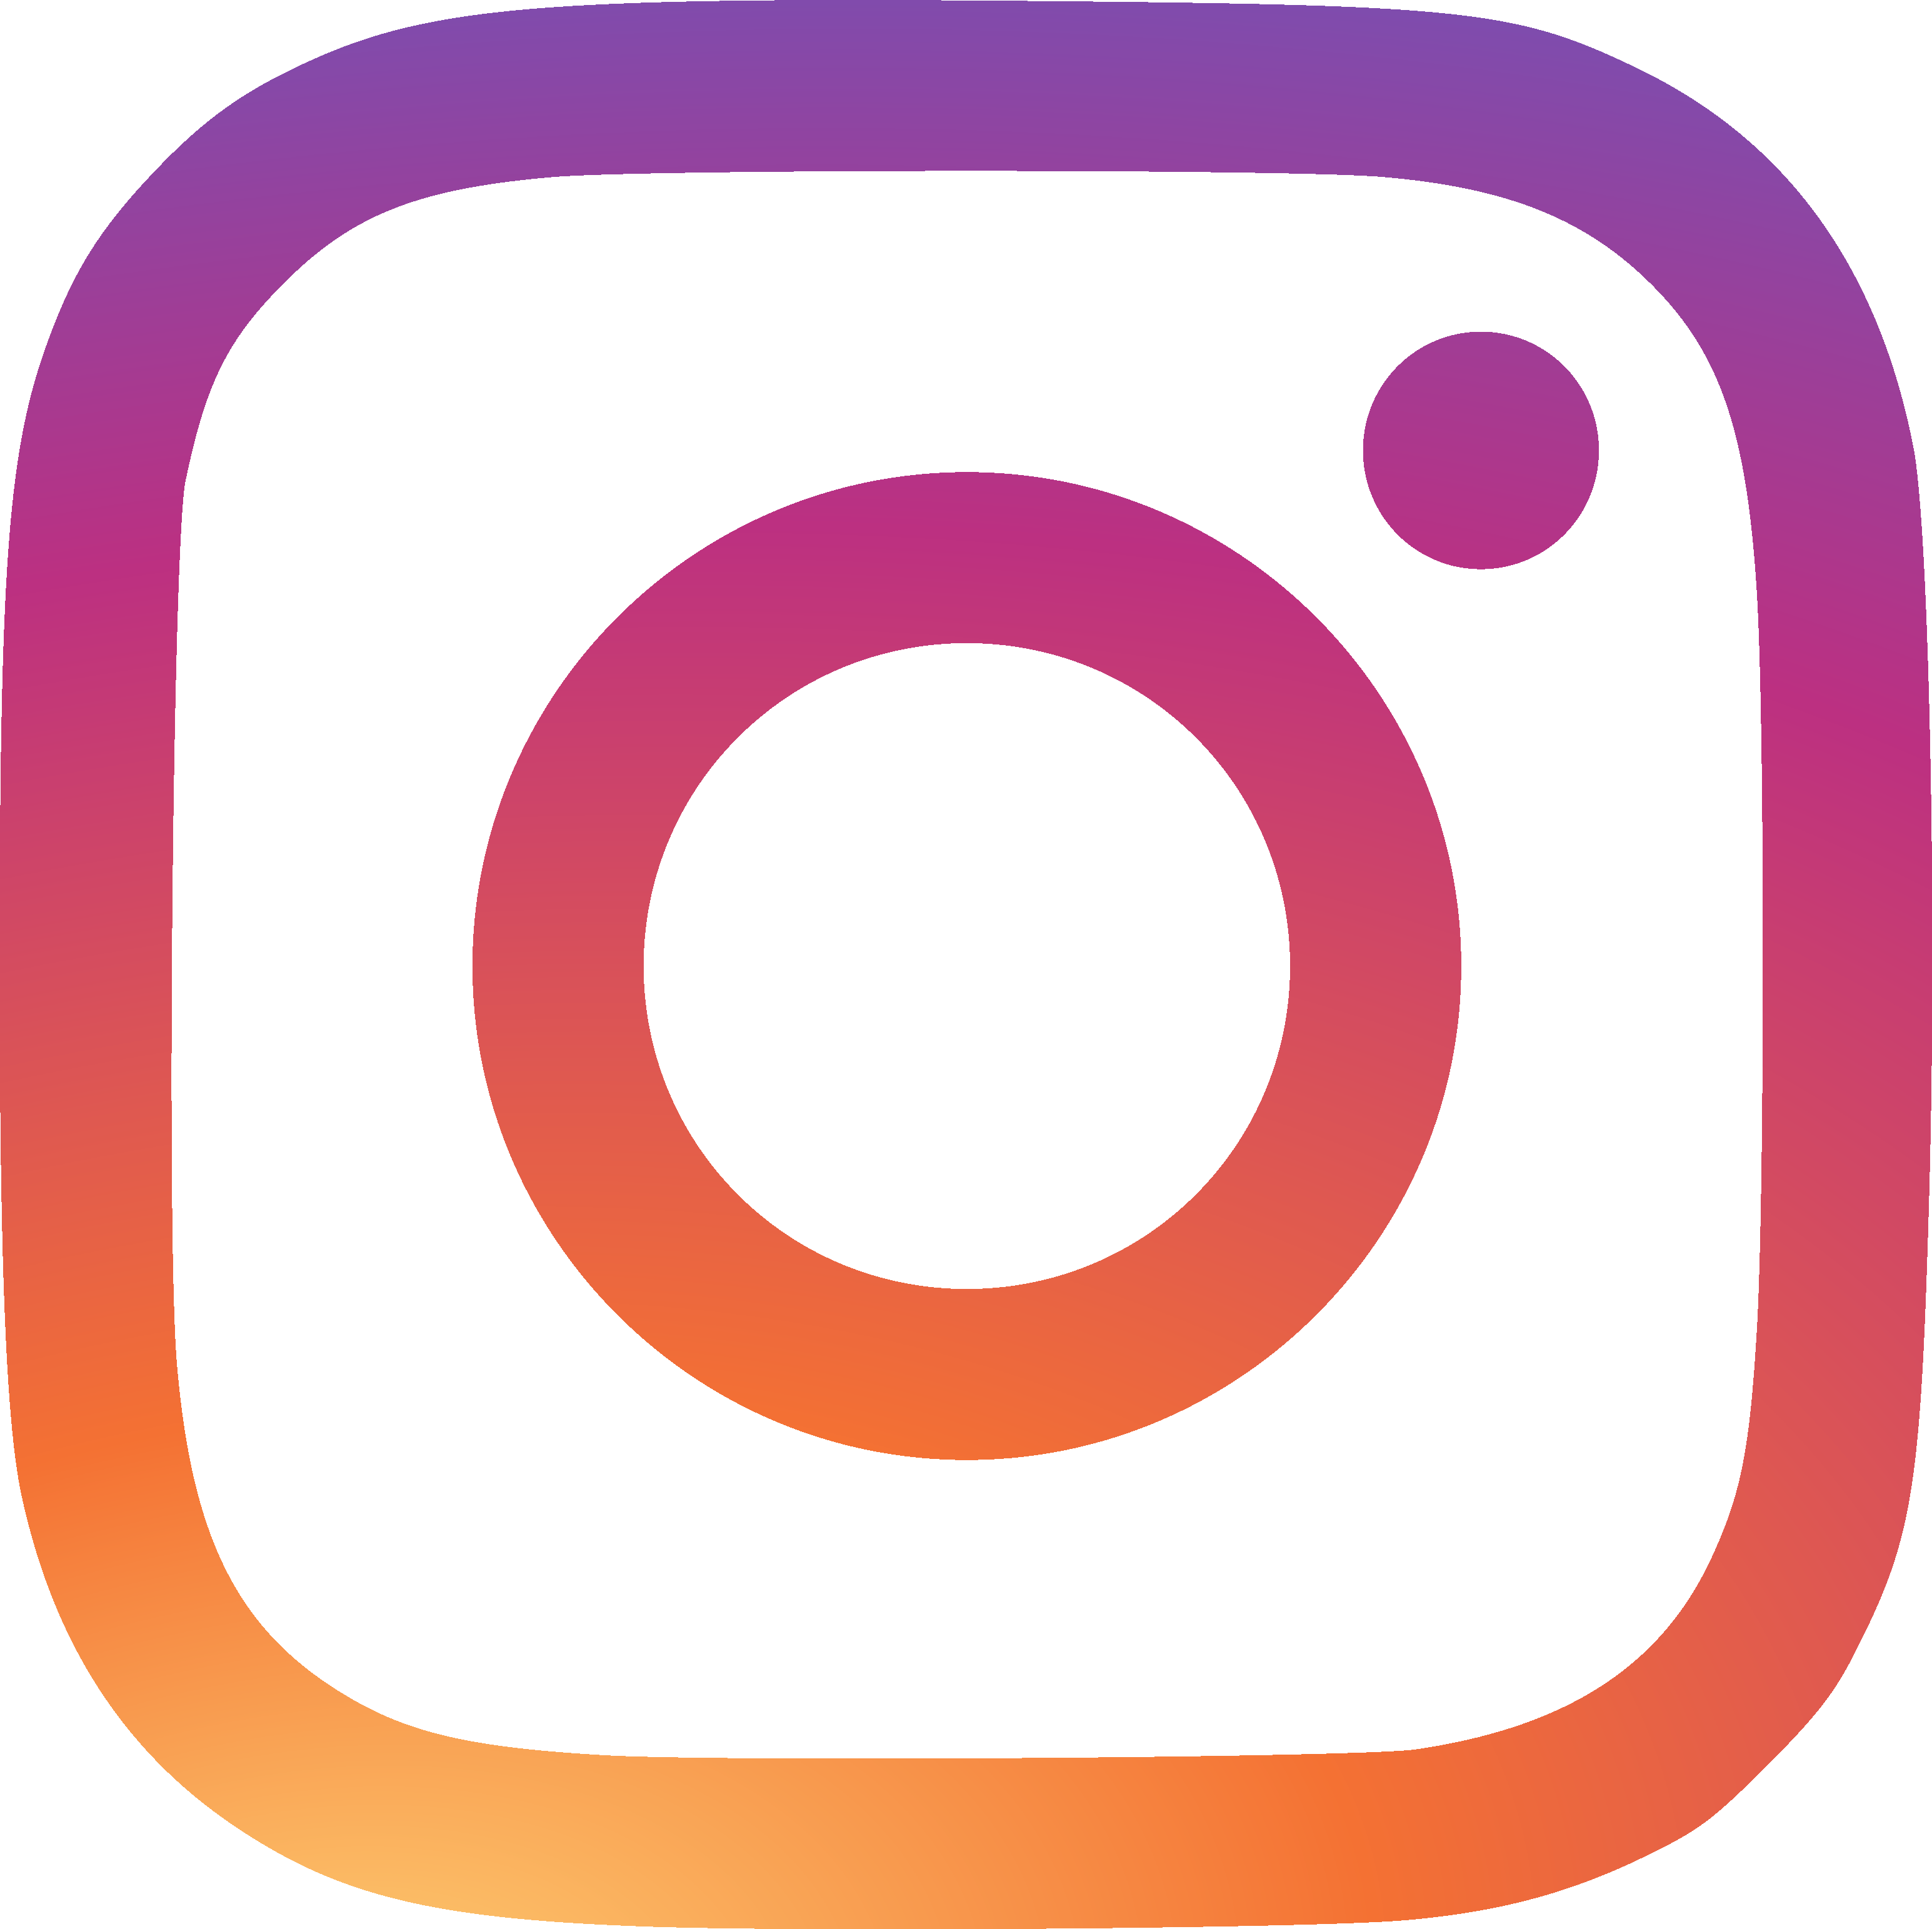 Instagram ICON And Instagram Logo, Symbol, Emblem Free DOWNLOAD - Free ...